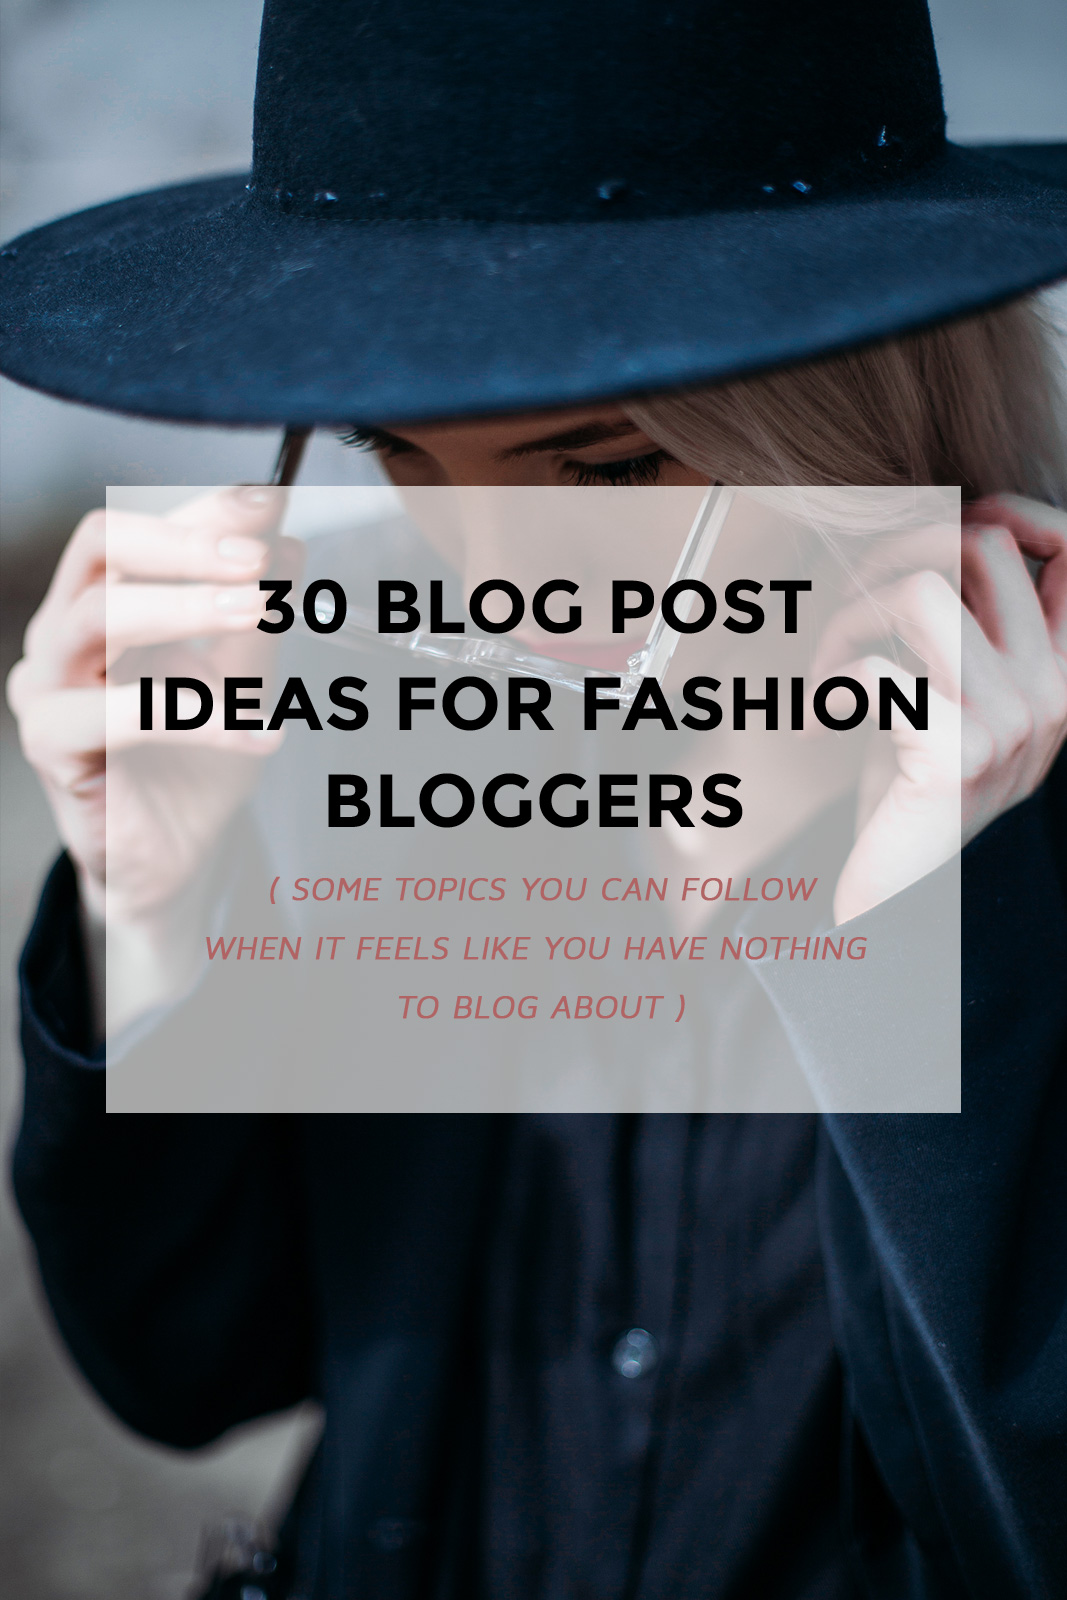 30-blog-post-ideas-for-fashion-bloggers.jpg